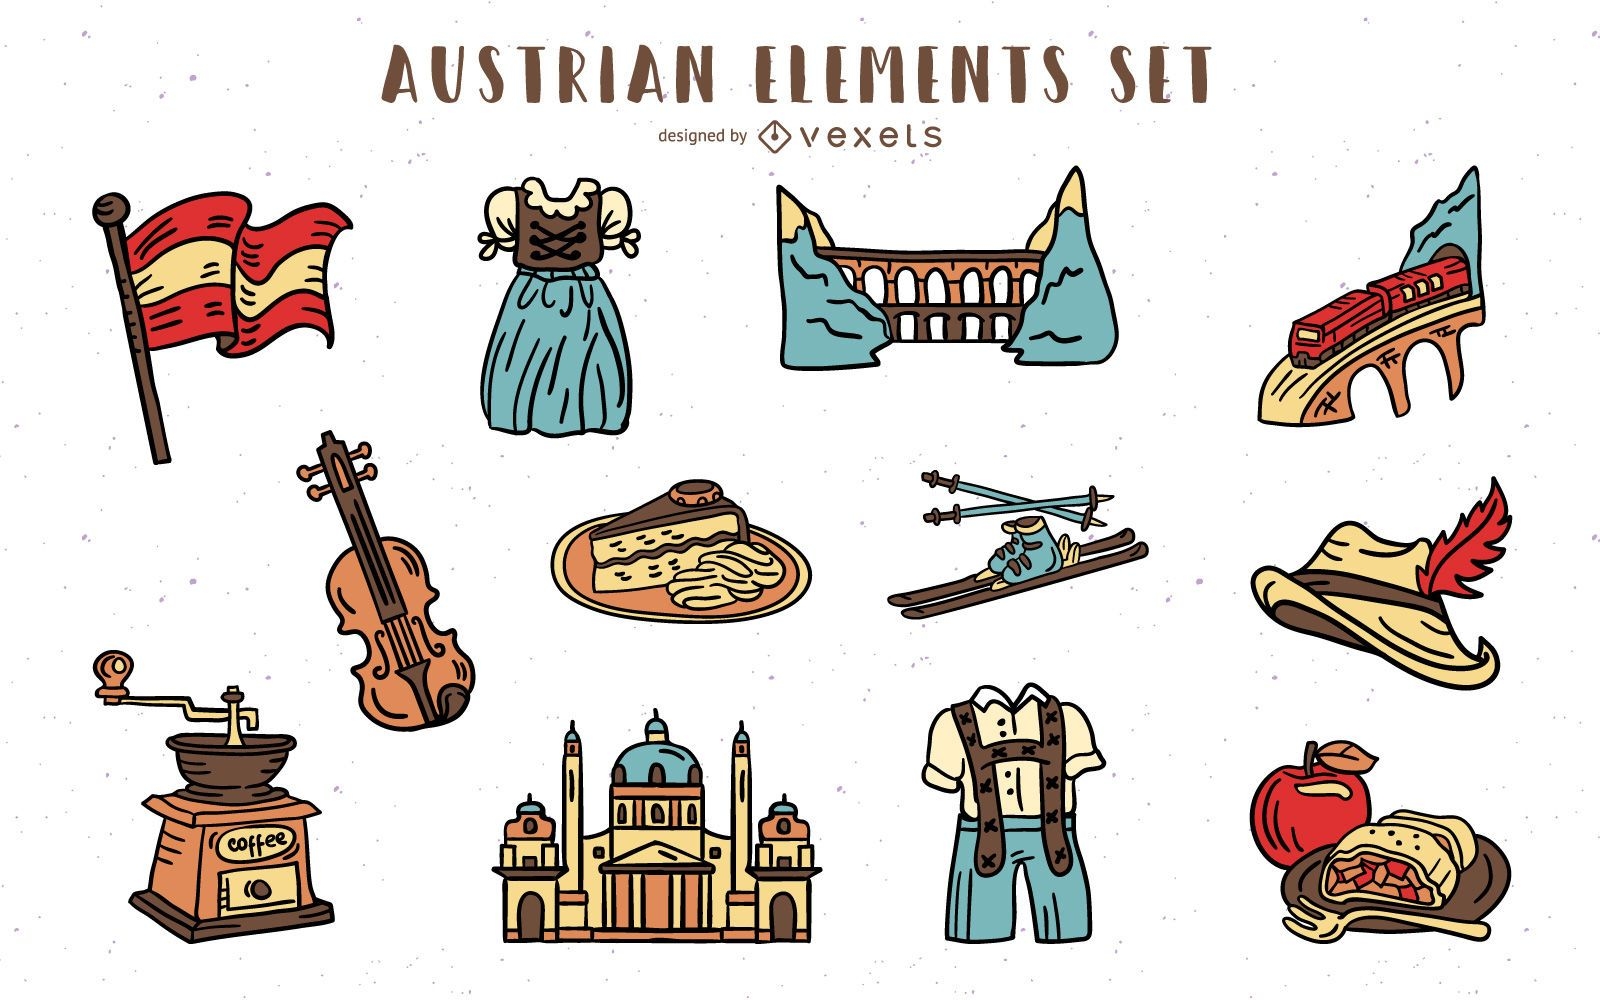 Austrian elements hand drawn set